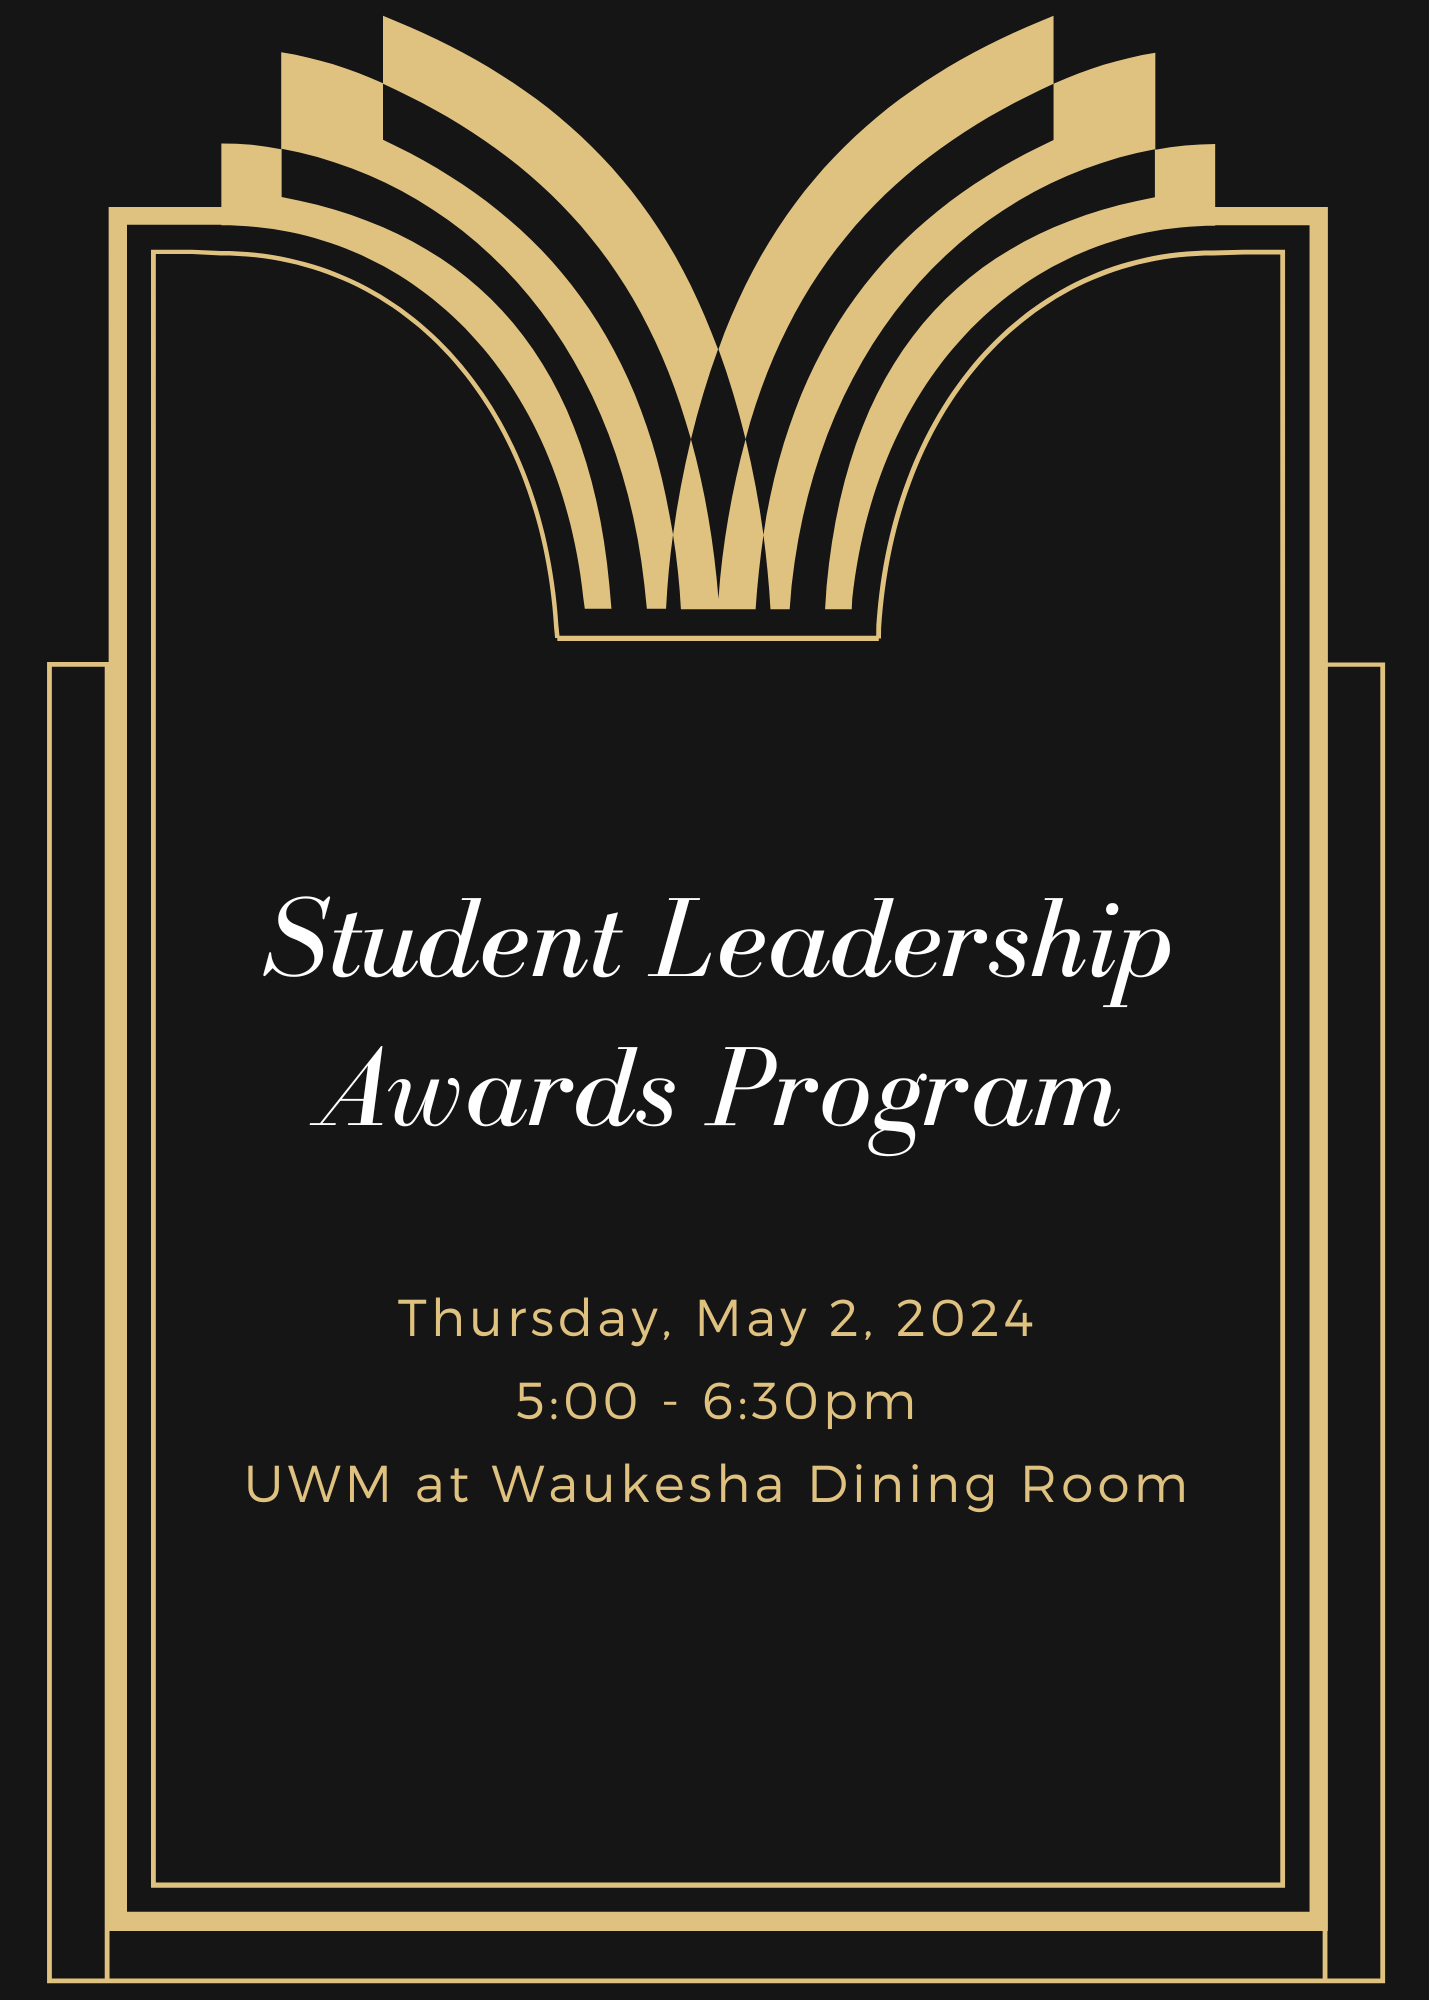 UWM at Waukesha Student Leadership Awards Program